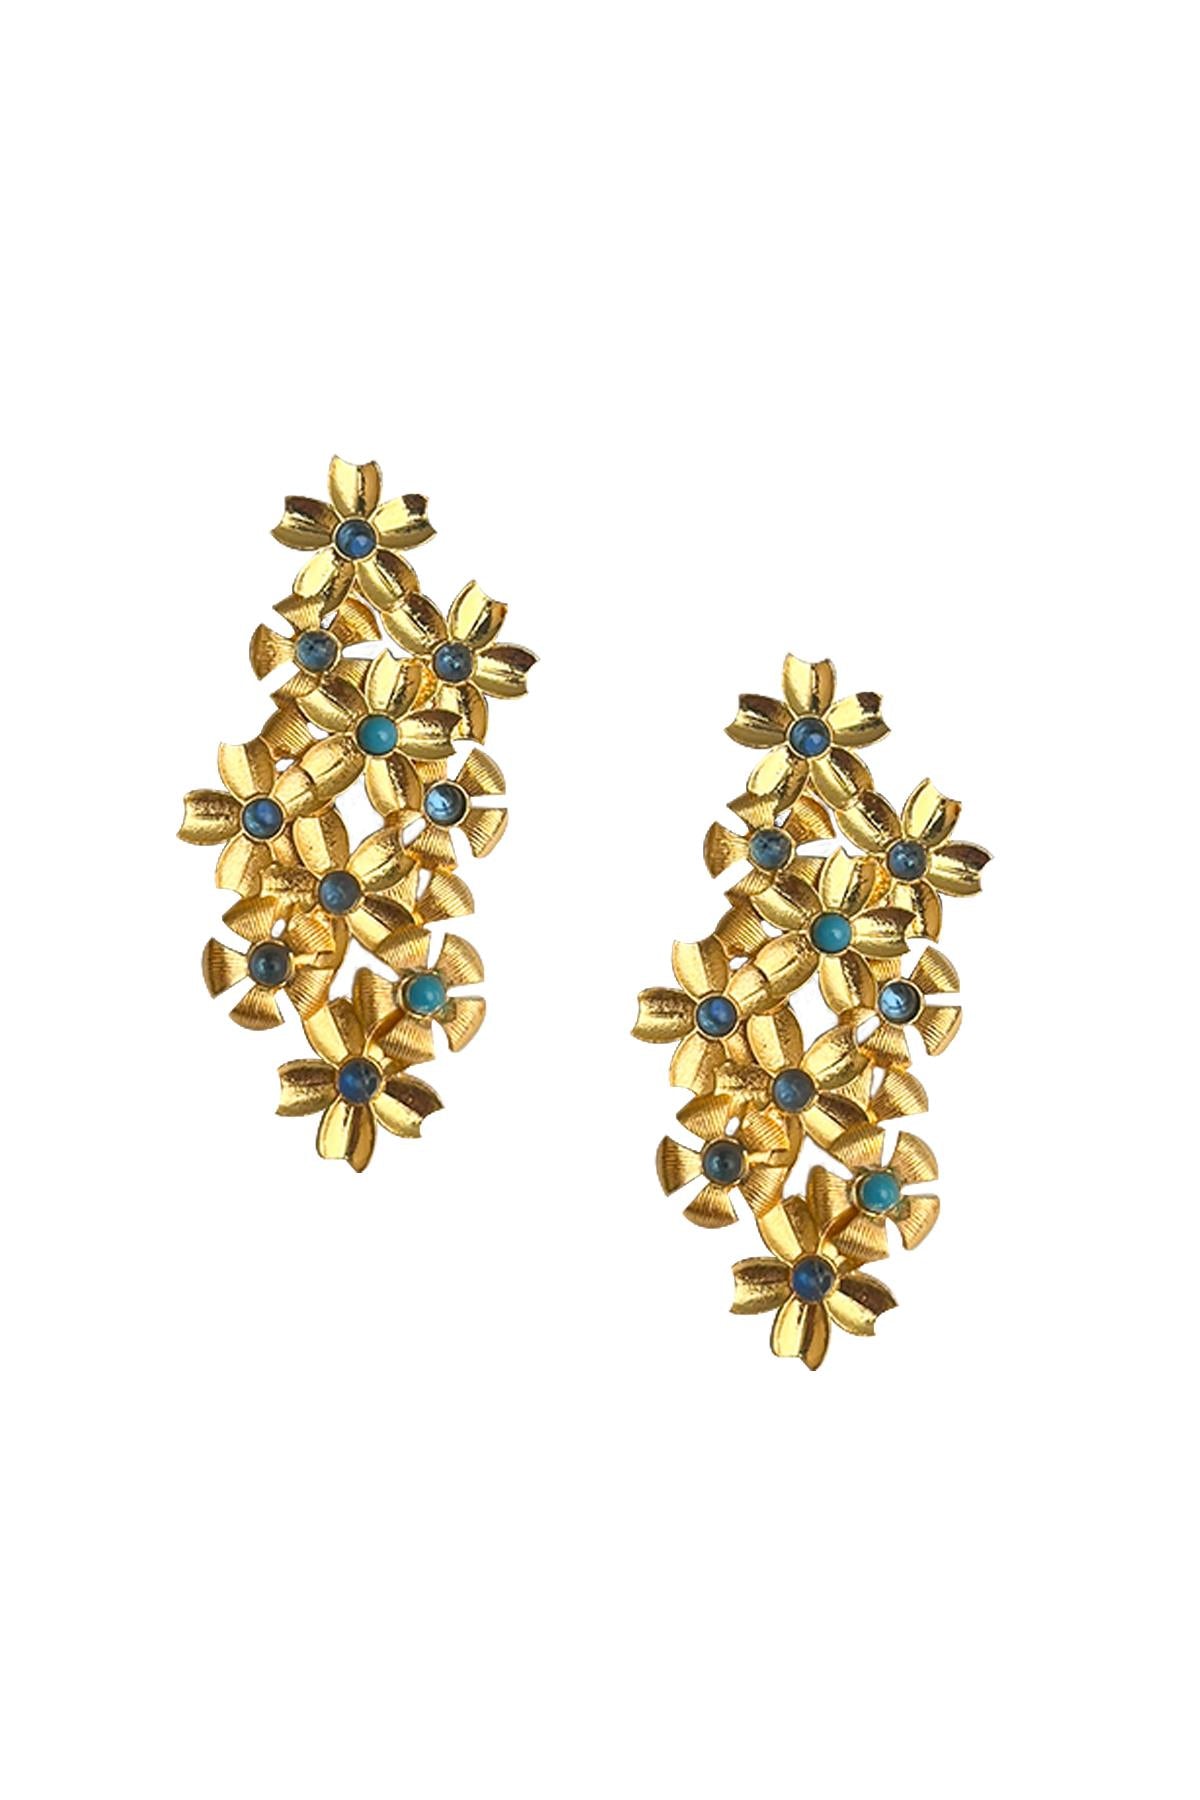 Blue Agate Flower Earrings Gold Plated